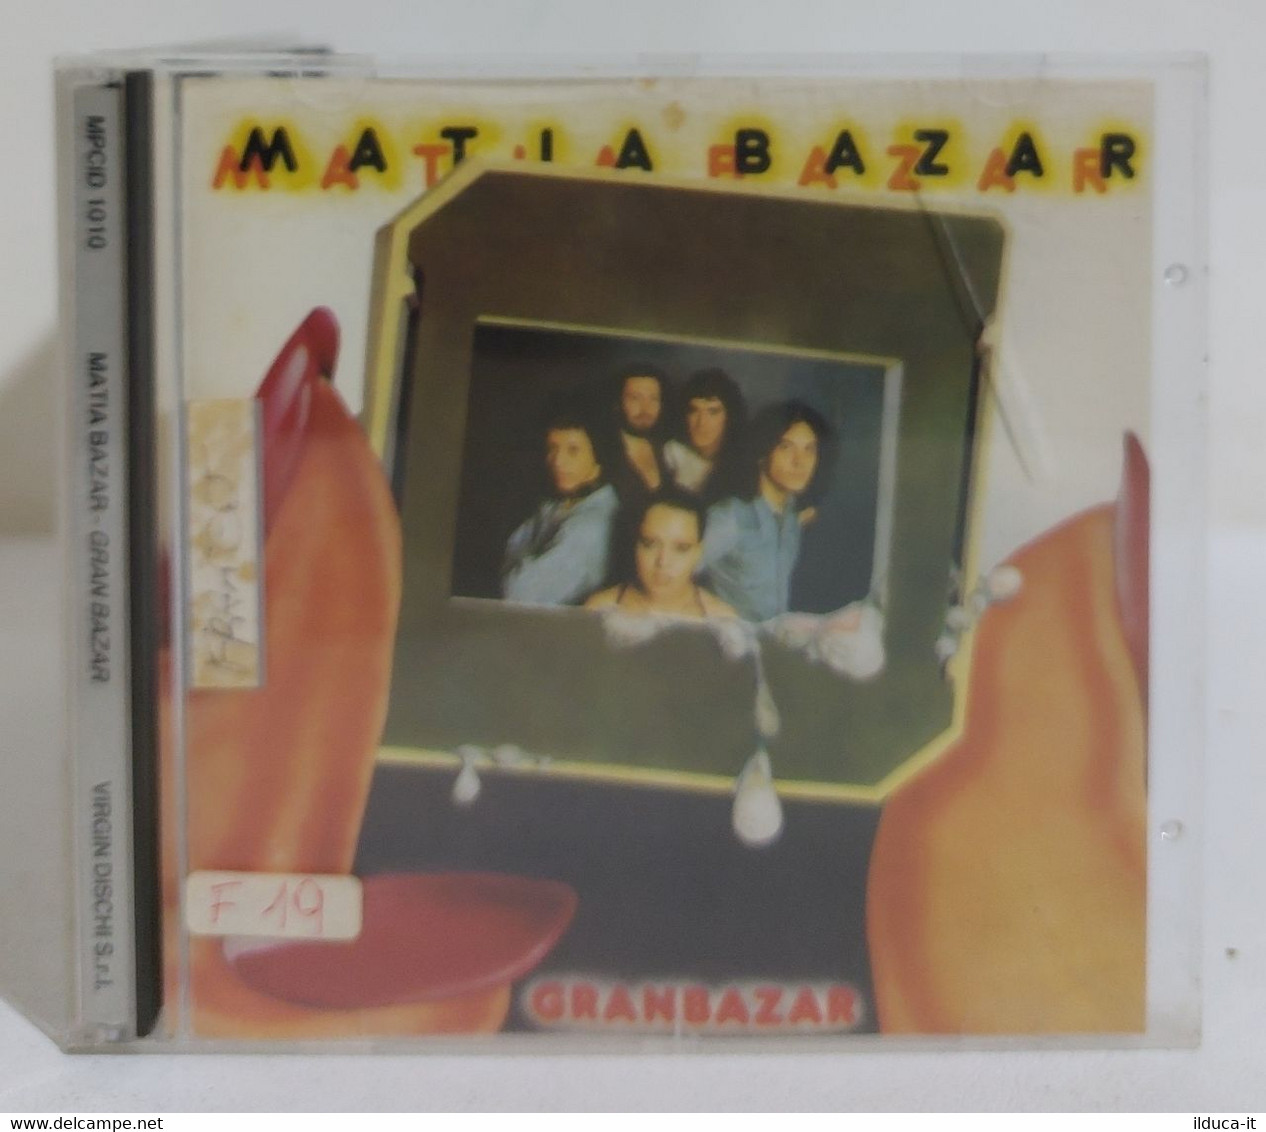 I107650 CD - Matia Bazar - Granbazar - Virgin 1991 - Andere - Italiaans